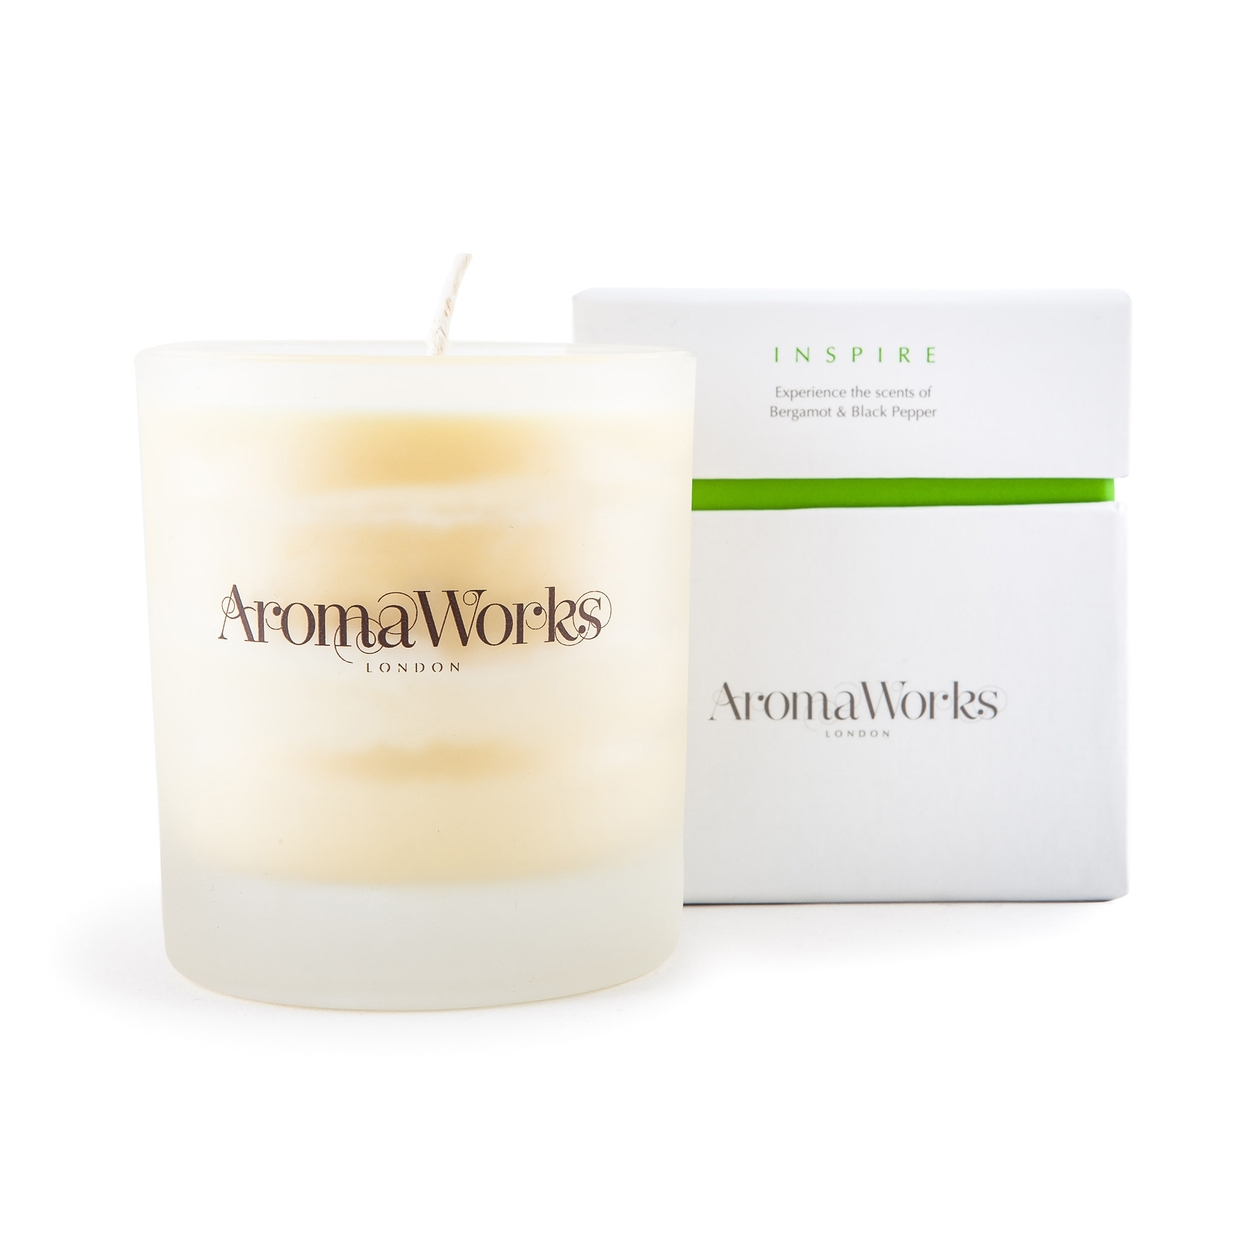 Aromaworks Inspire Candle Medium 7.76 Oz